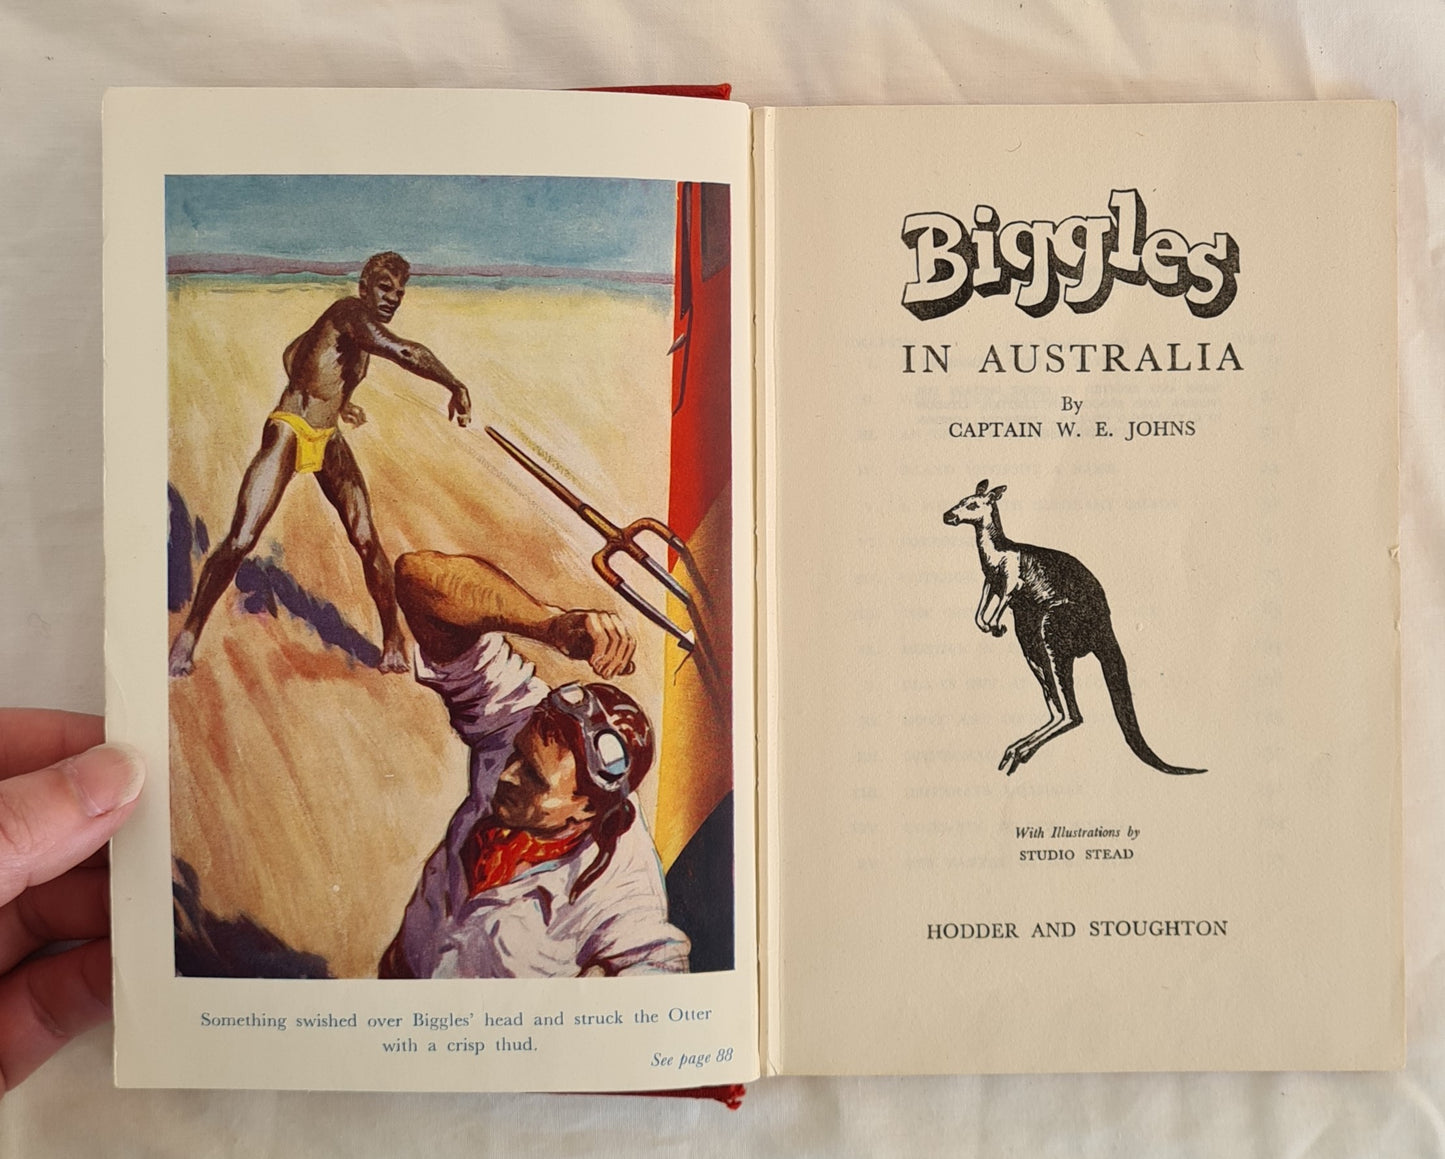 Biggles in Australia by Captain W. E. Johns